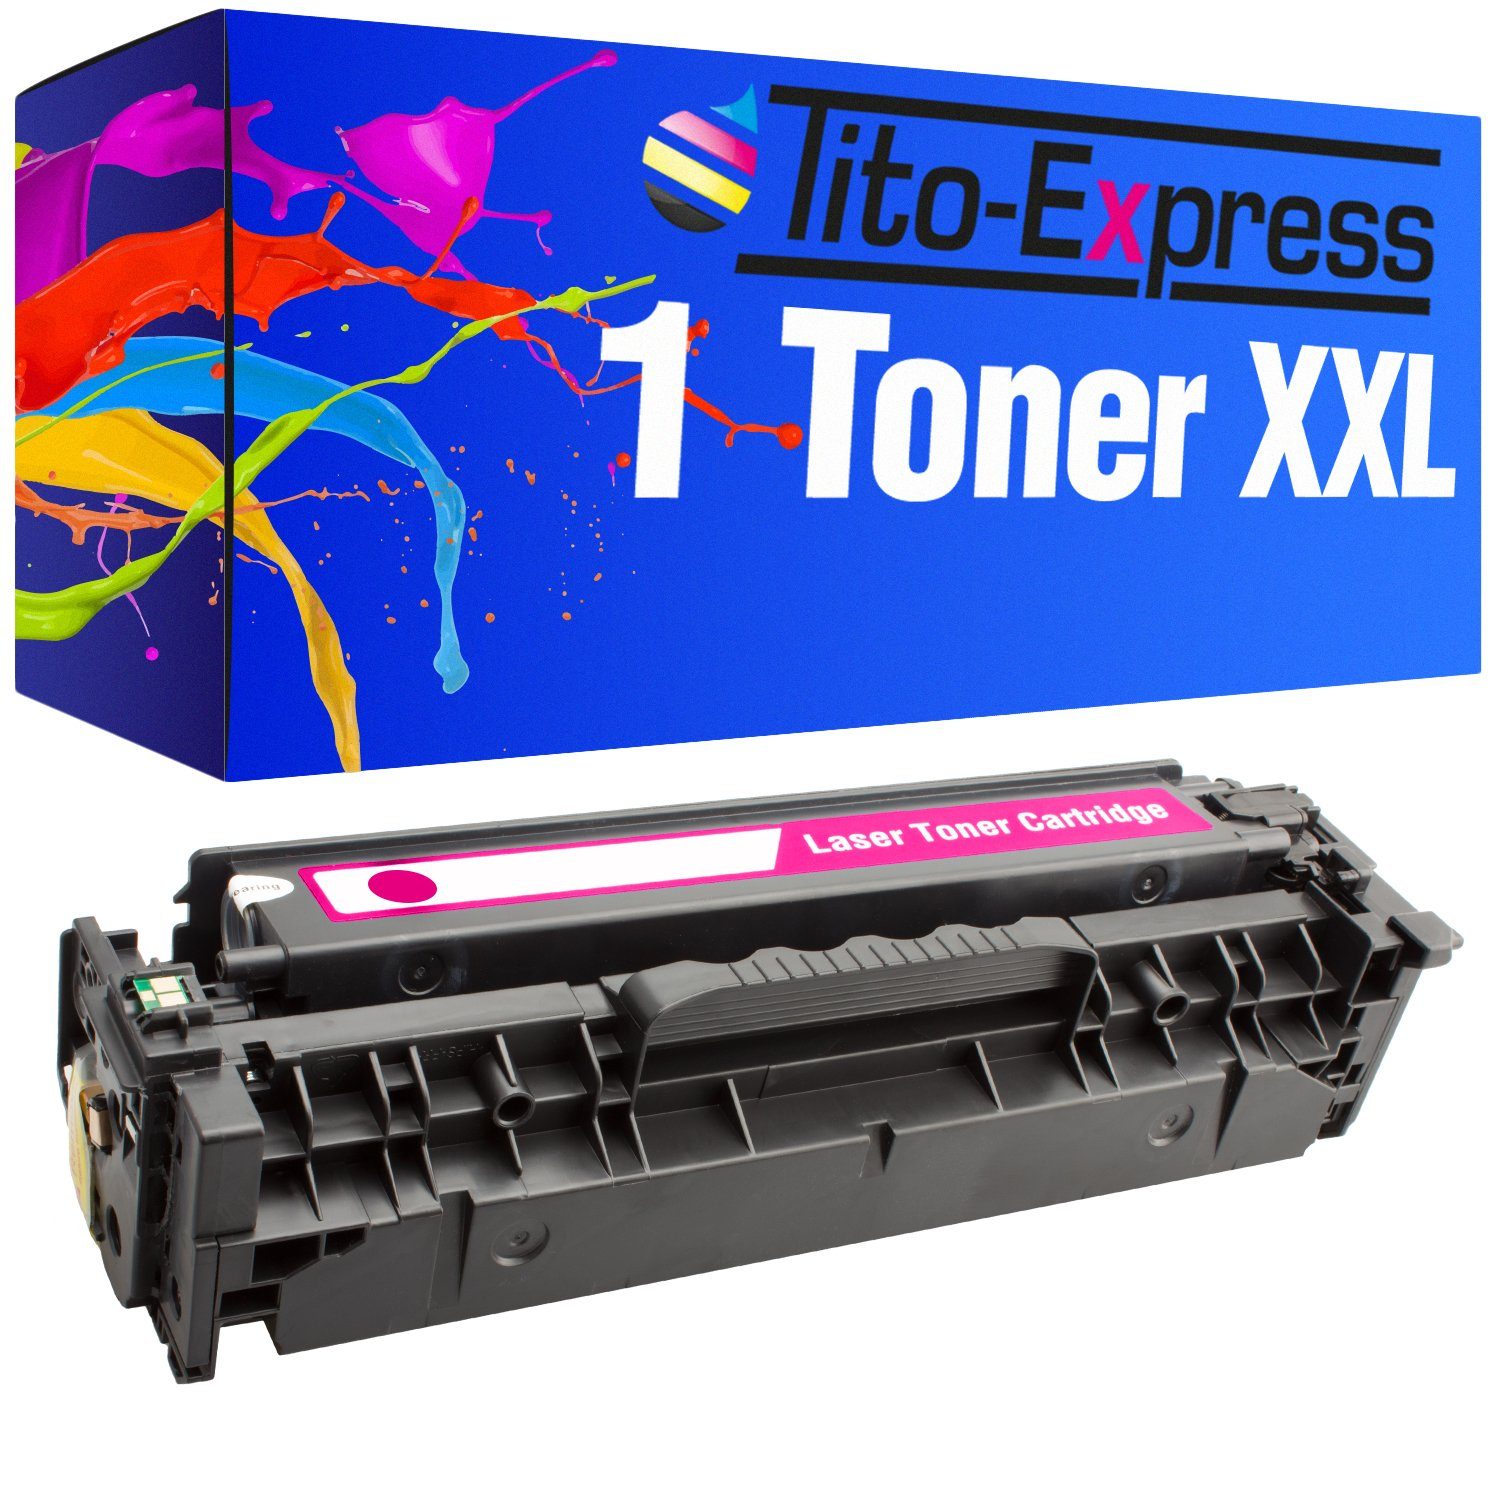 Tito-Express Tonerpatrone ersetzt HP CE413A HP CE 413 A HPCE413A HP 305A Magenta, (1x Magenta), für Laserjet Pro 400 Color M451dn M451dw M451nw MFP M475dn M475dw